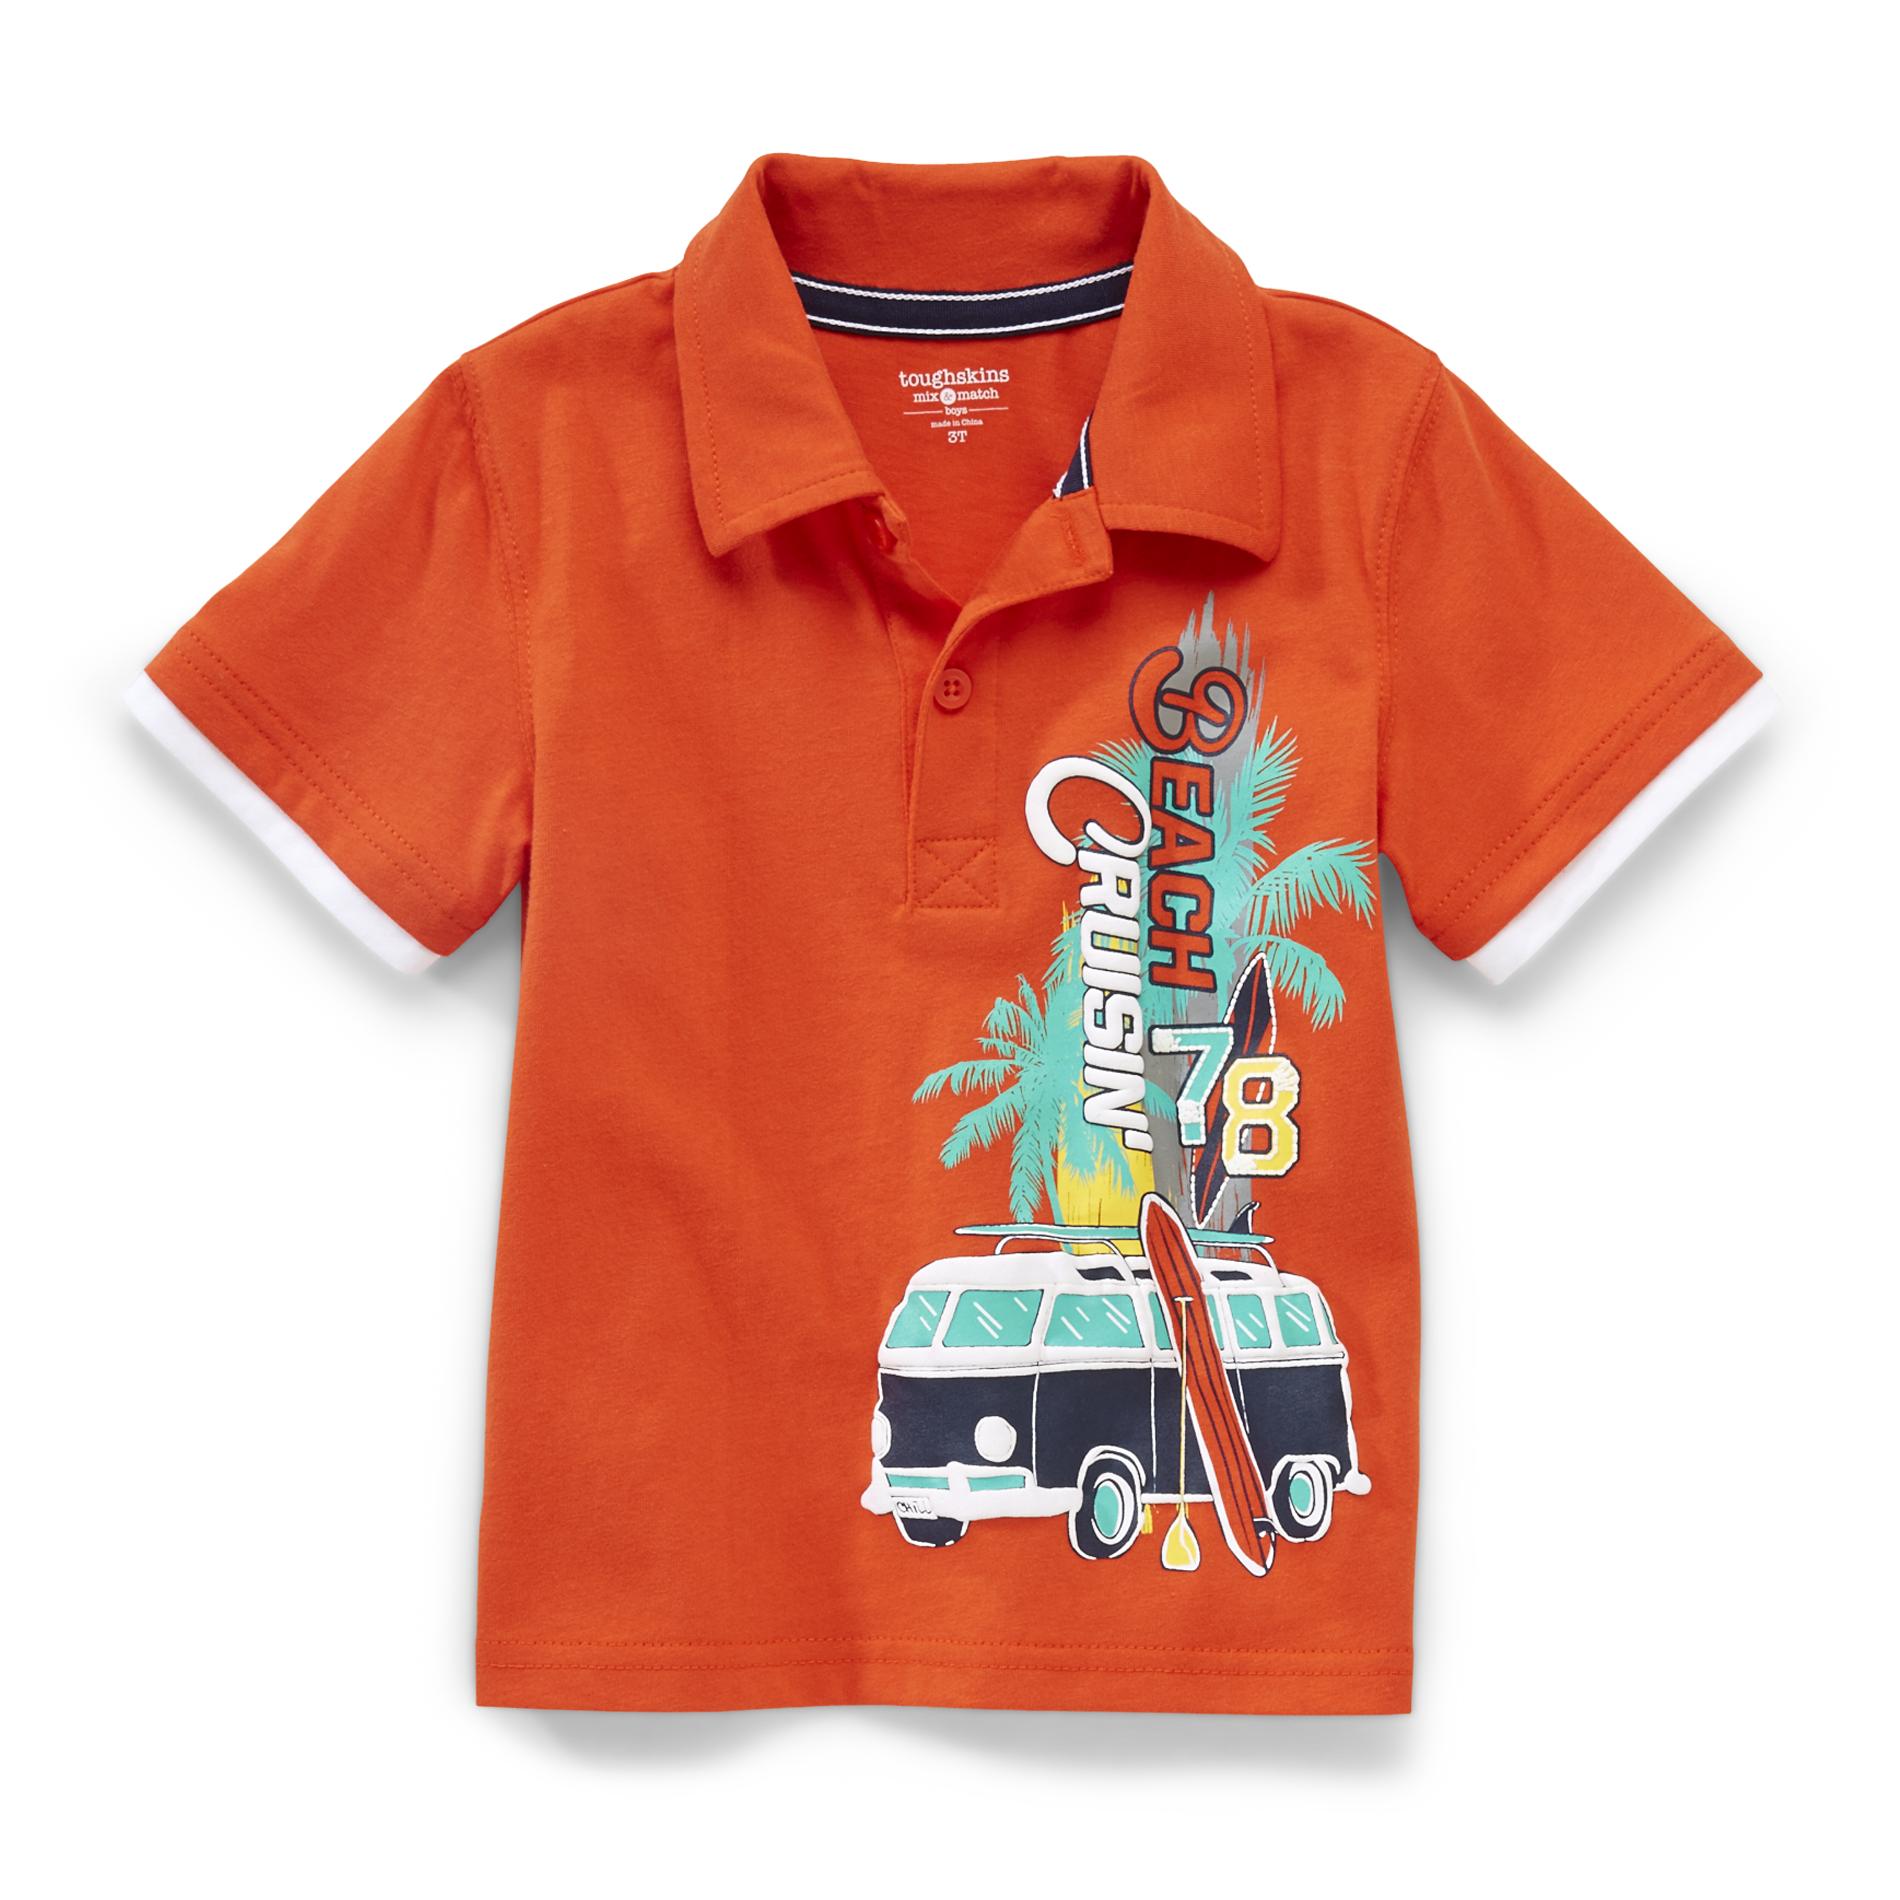 Toughskins Boy's Graphic Polo Shirt - Beach